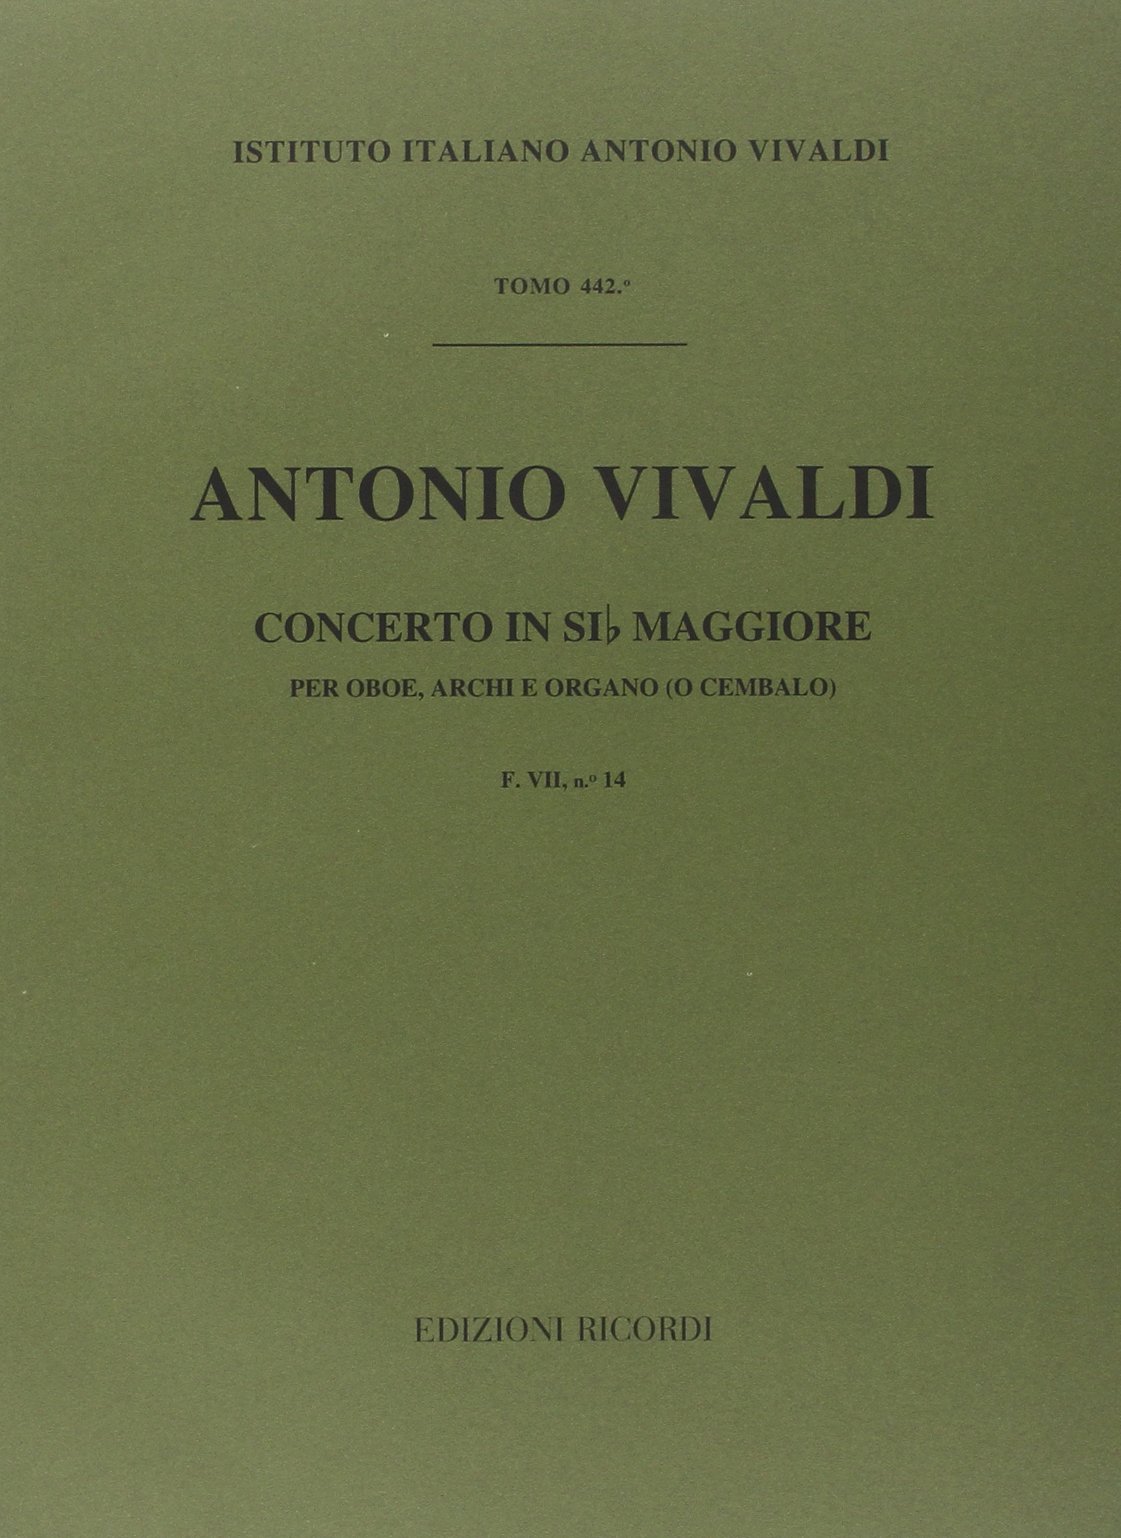 Concerto Per Oboe, Archi E B.C.: In Si Bem. Op. VIi L.I N.1 - Rv 465 - F.VIi/14 Tomo 442 (VIVALDI ANTONIO)